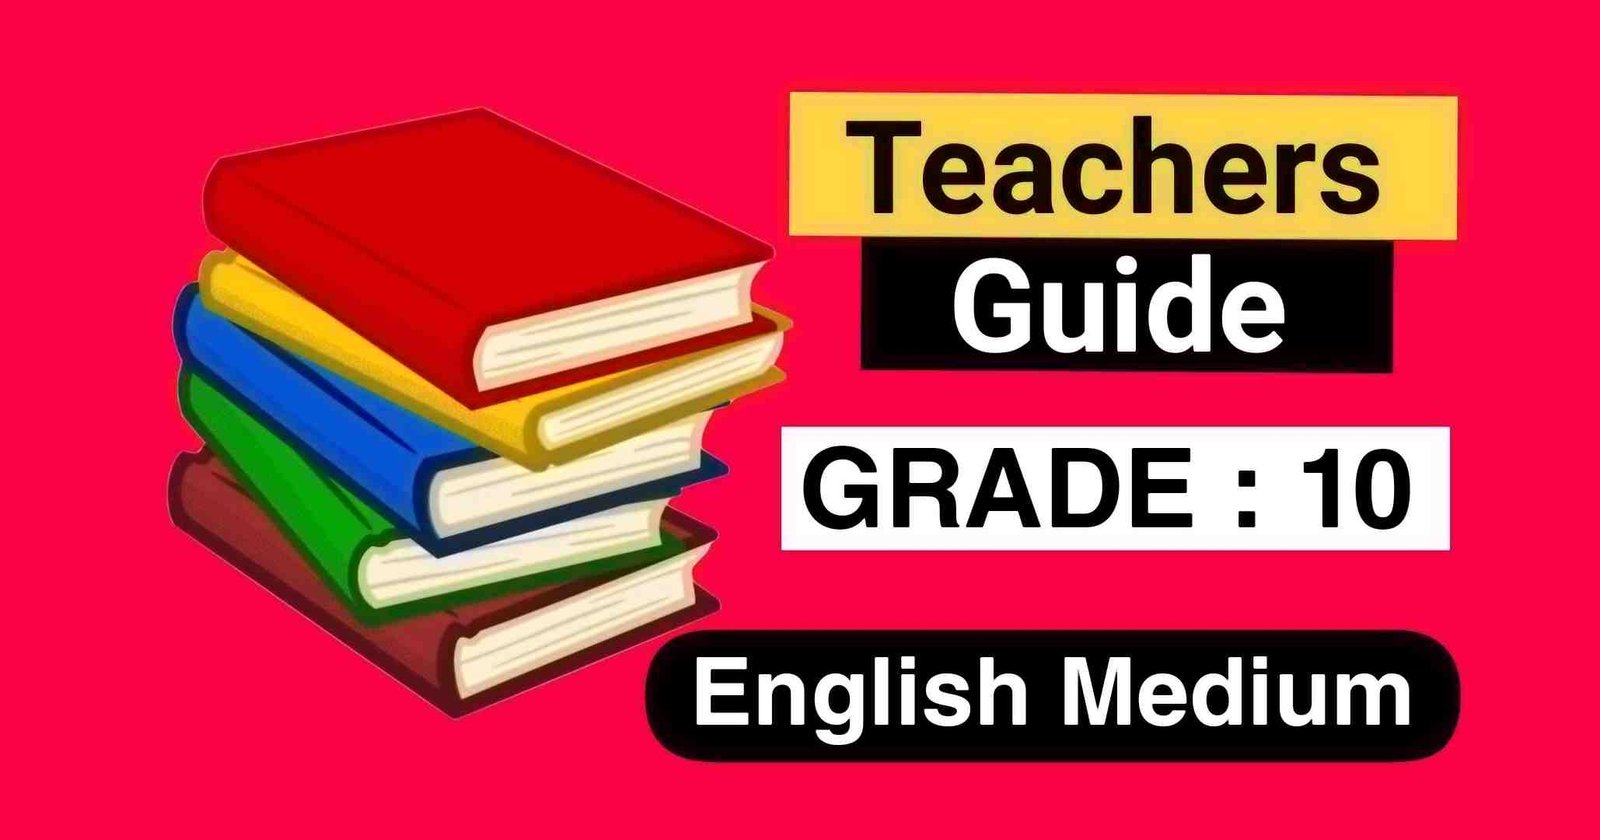 Grade 10 English Medium Teachers’ Guide Download